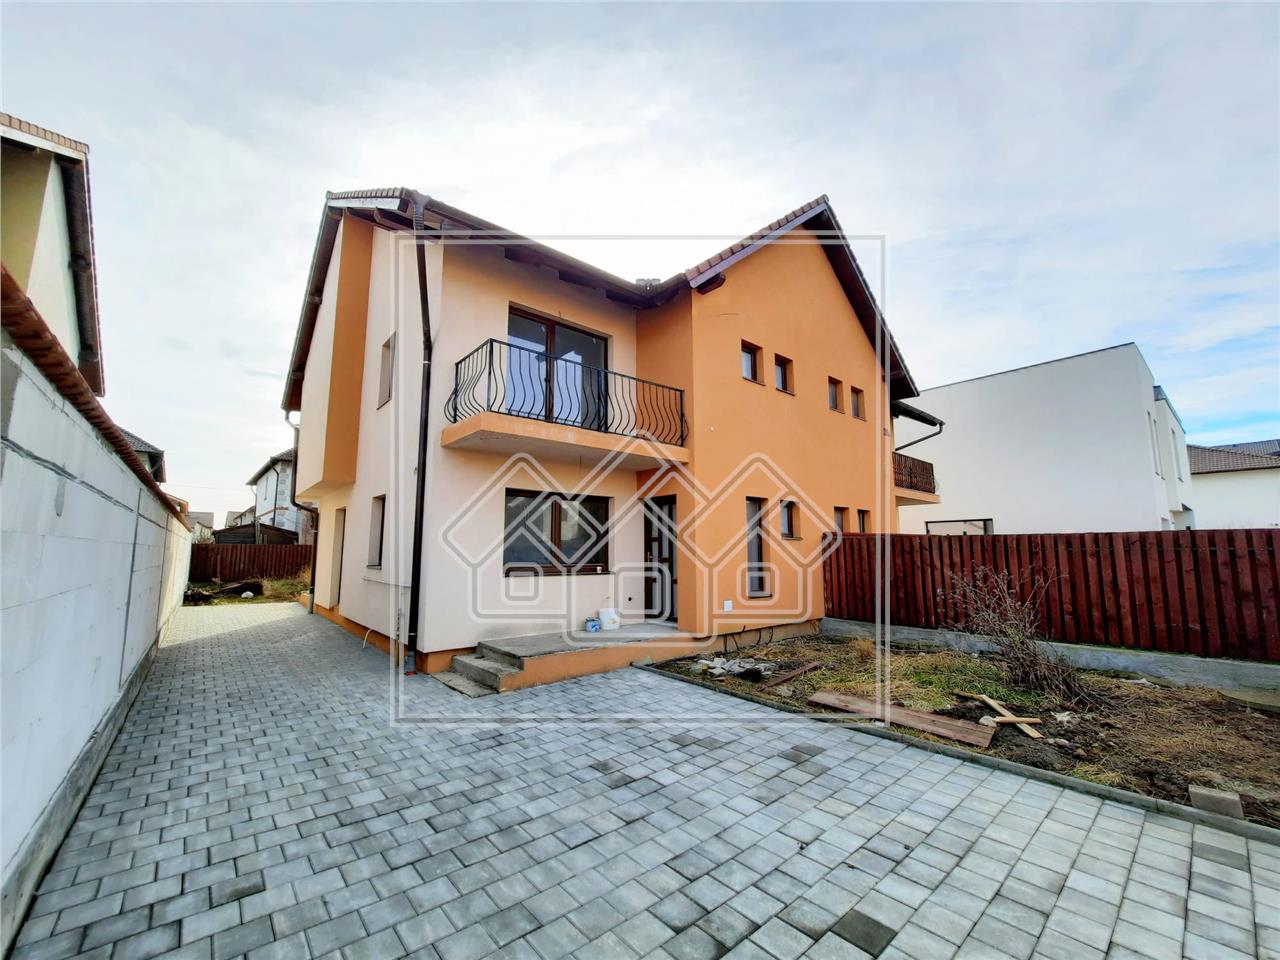 Casa de inchiriat in Sibiu - imobil nou, 4 camere - C. Arhitectilor